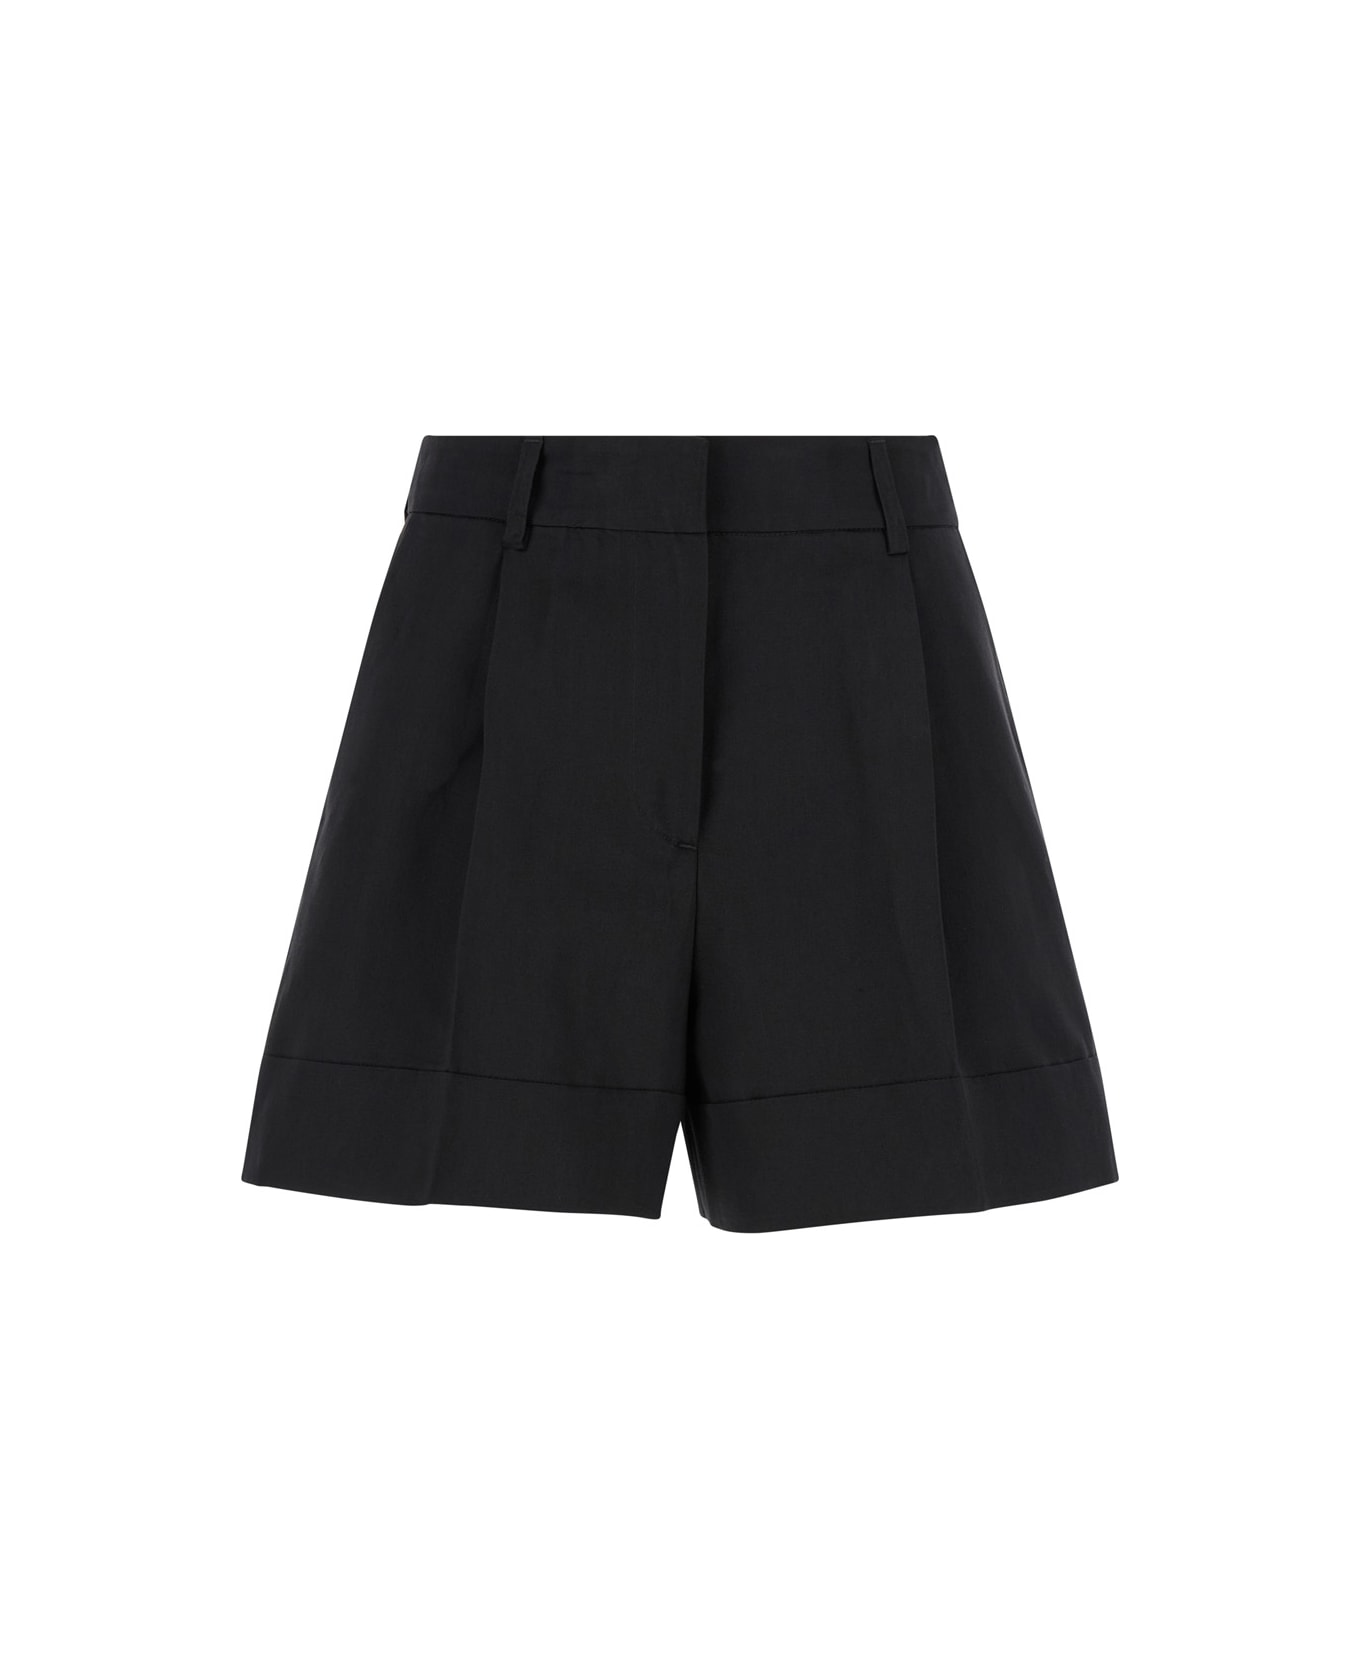 PT Torino Black High Waisted 'delia' Shorts In Cotton & Linen Blend Woman - Black